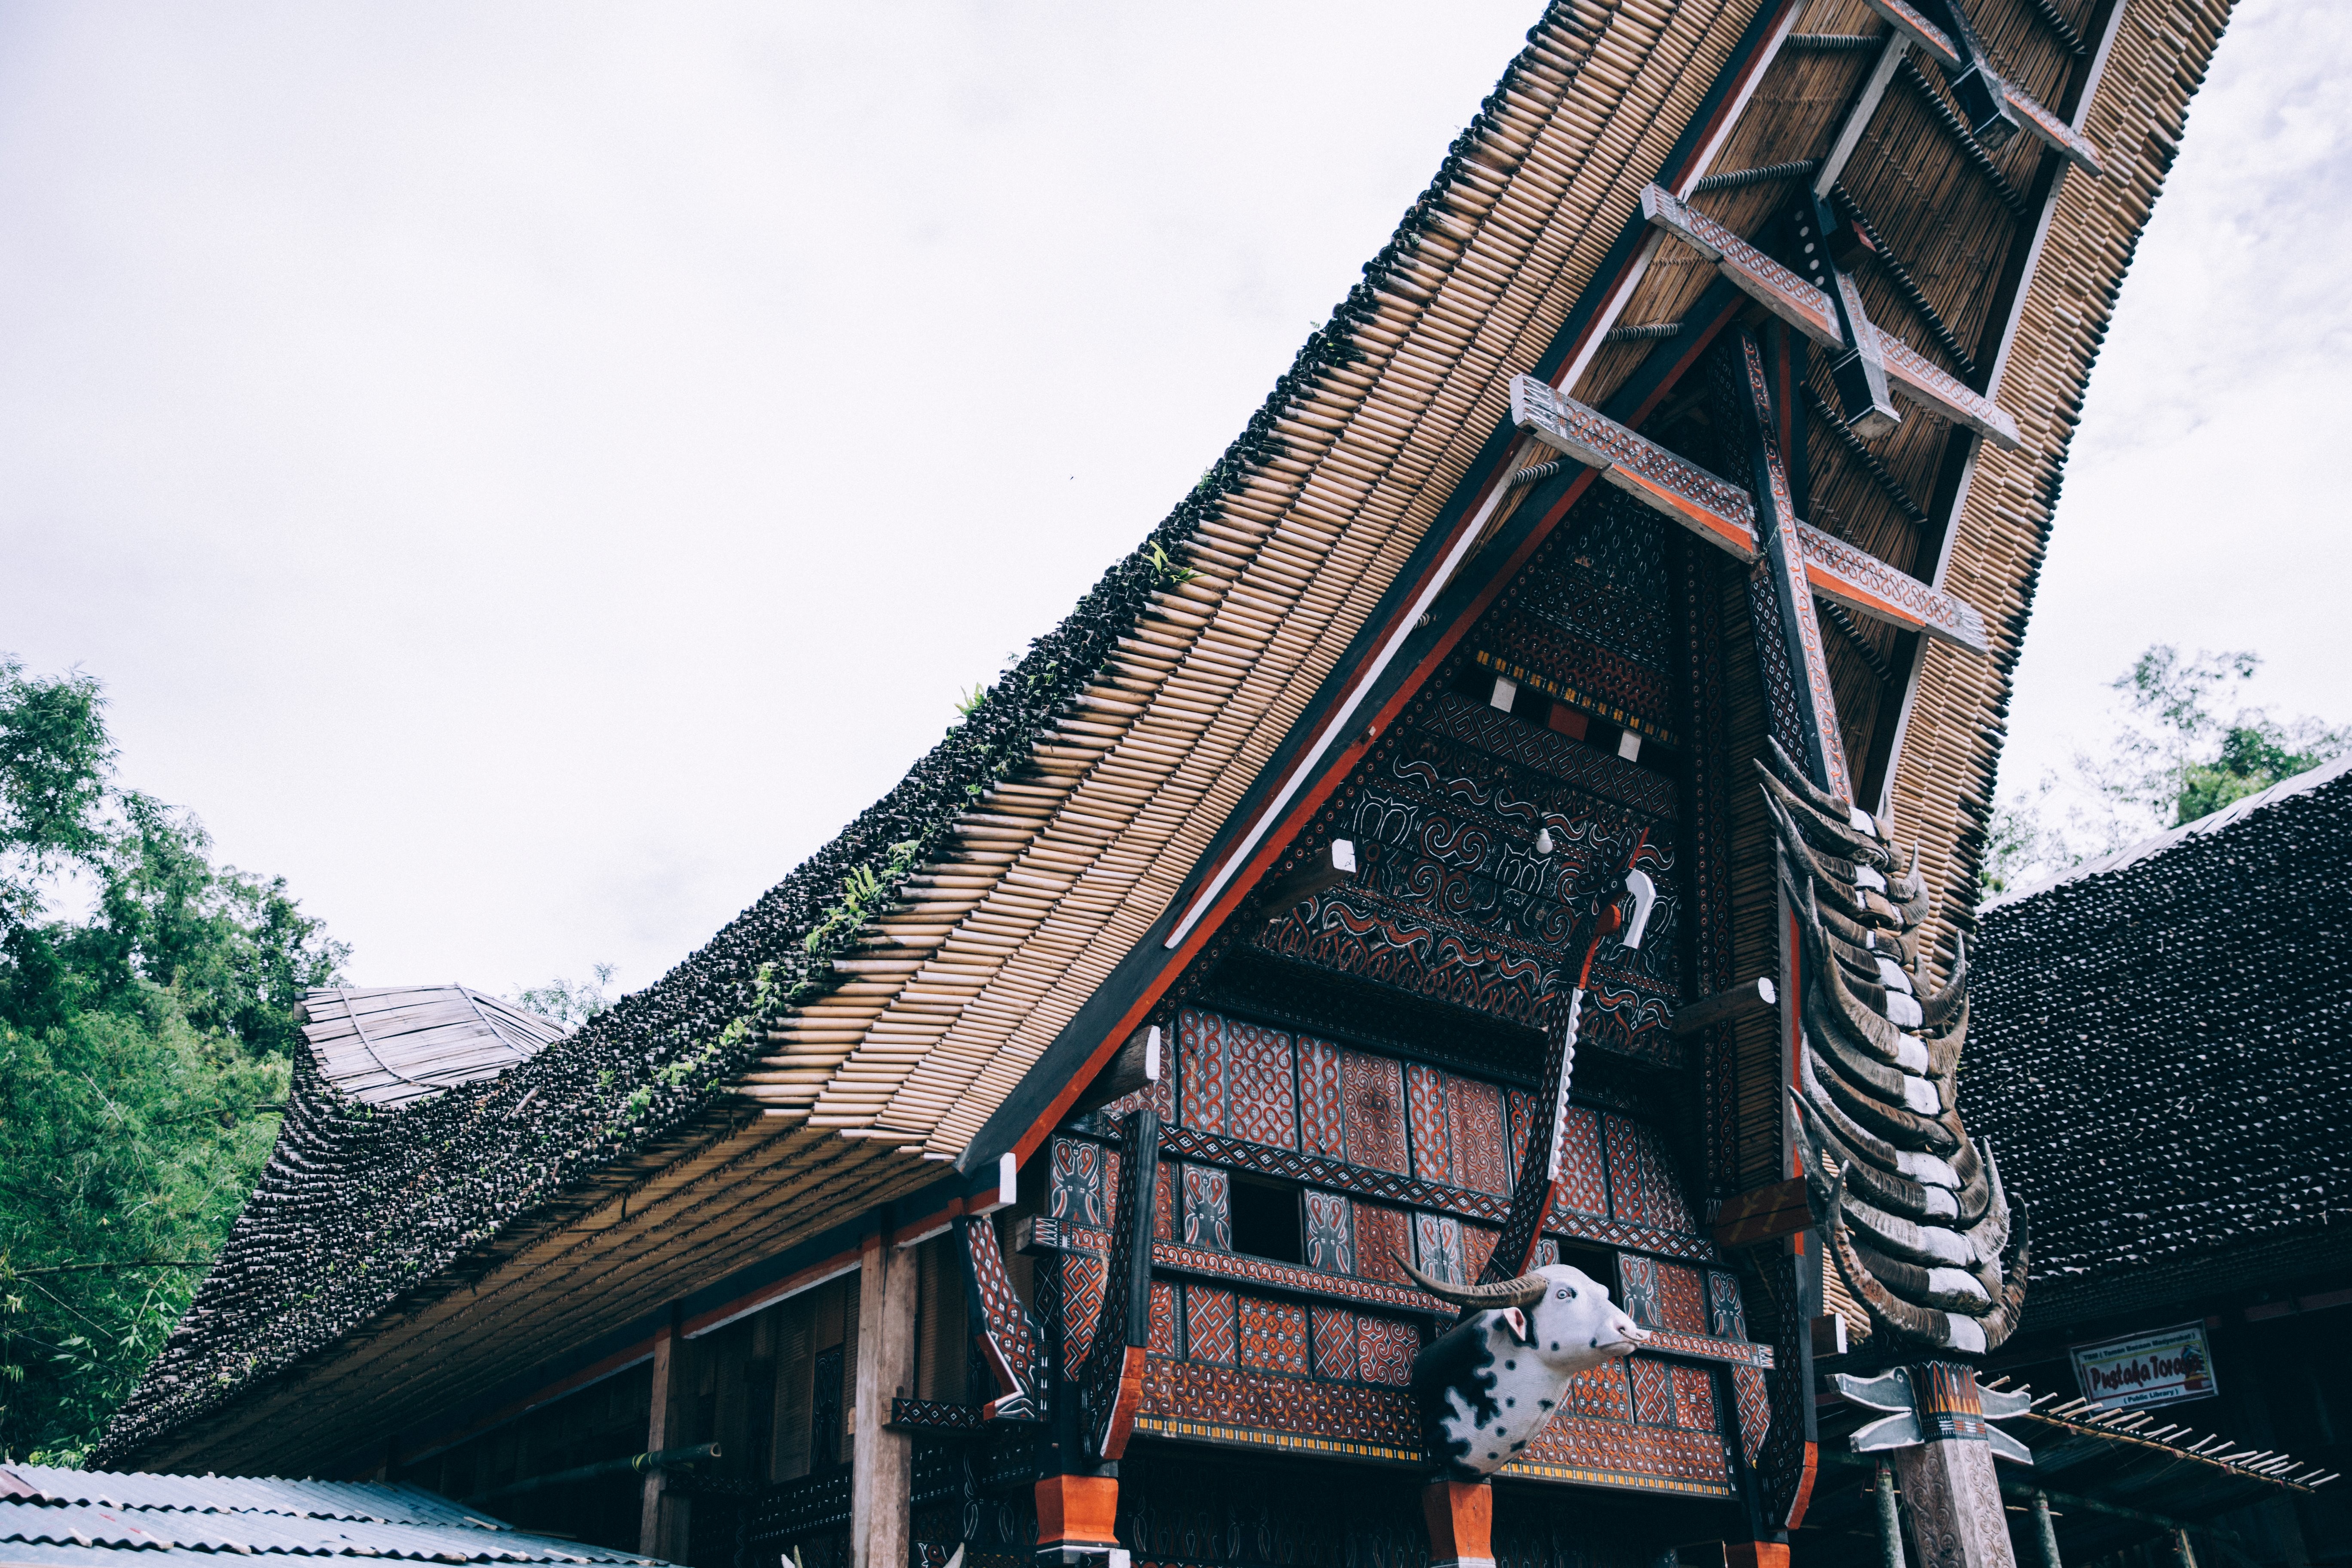 Foto Overhead Menara Candi Bambu Indonesia yang Hiasan 